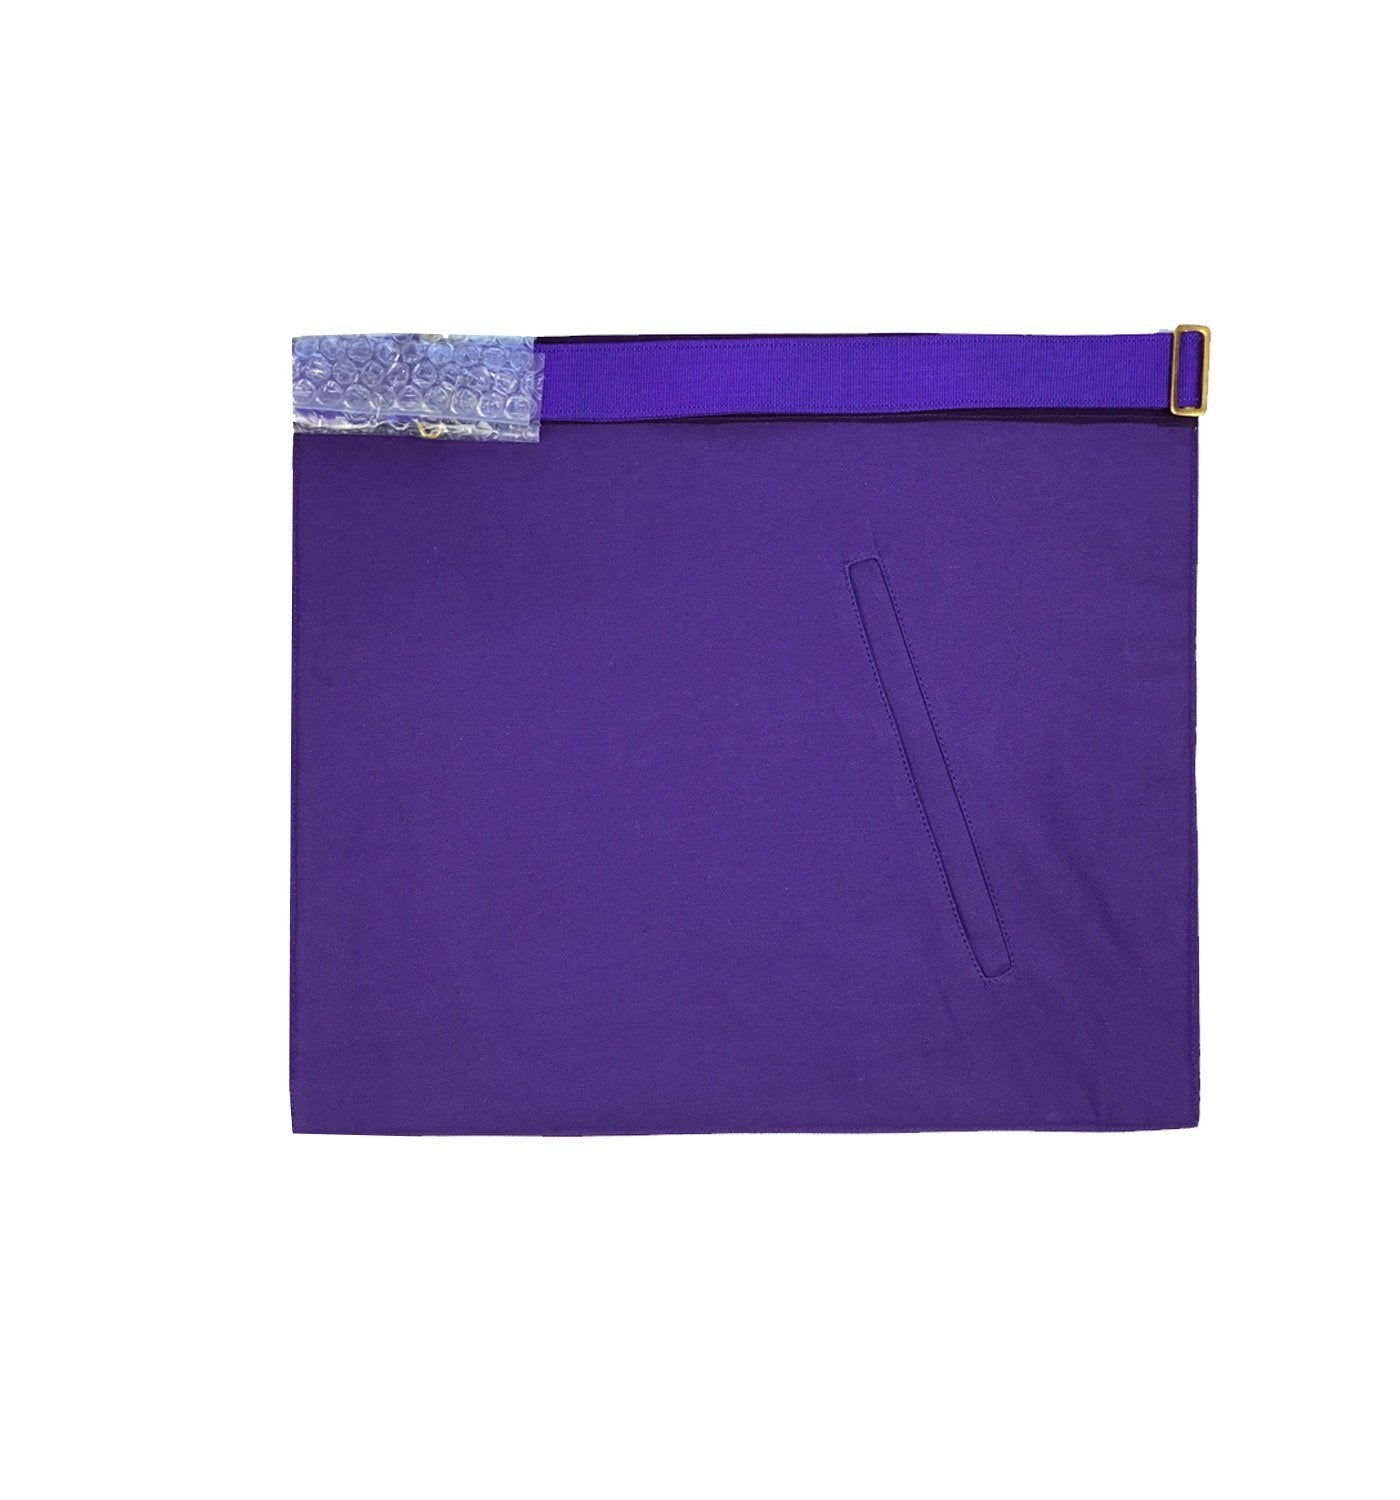 Past Master Blue Lodge Apron - Purple Velvet with Gold Hand Embroidery - Bricks Masons